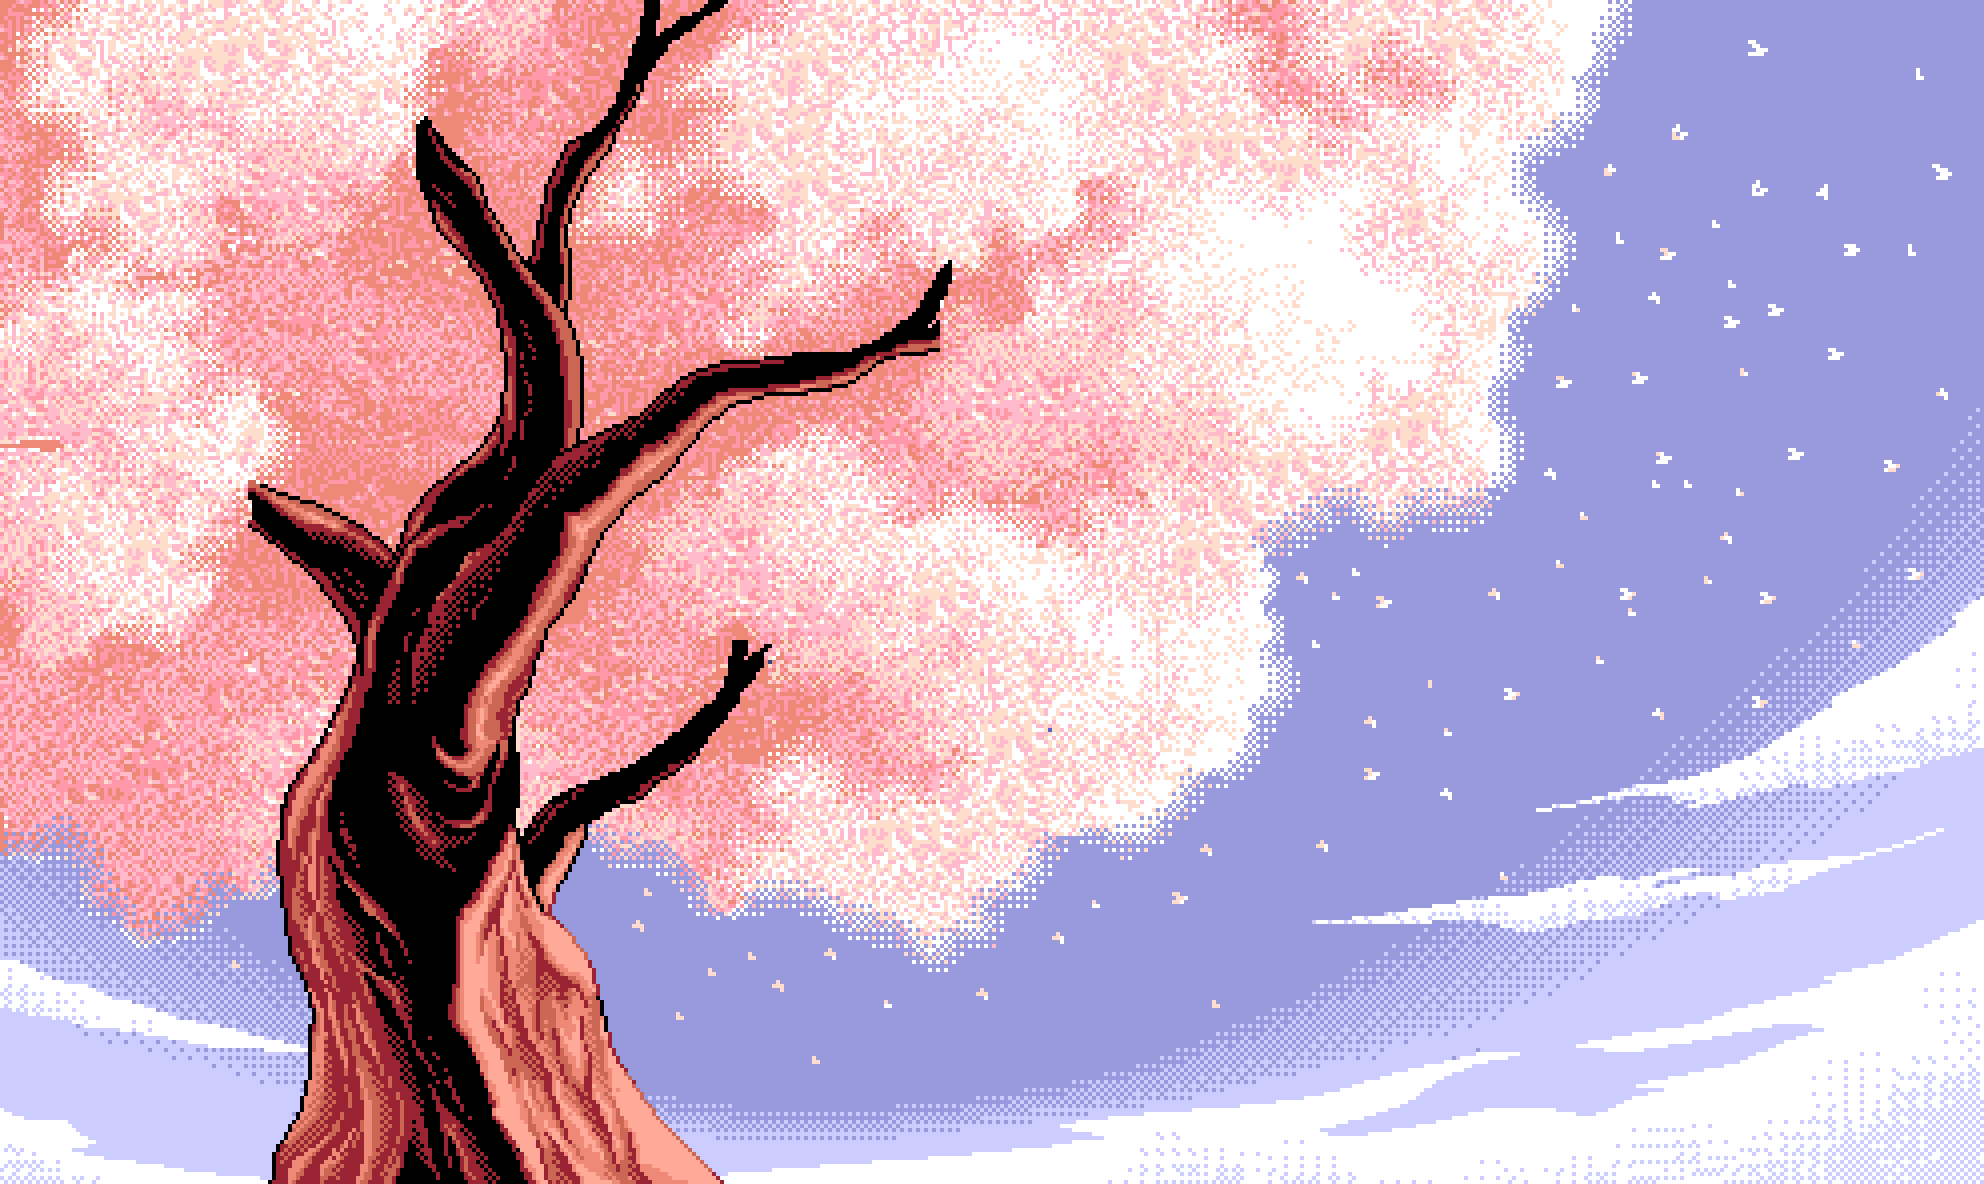 General 1984x1184 pixel art cherry trees cherry blossom pink pixelated petals trees digital art